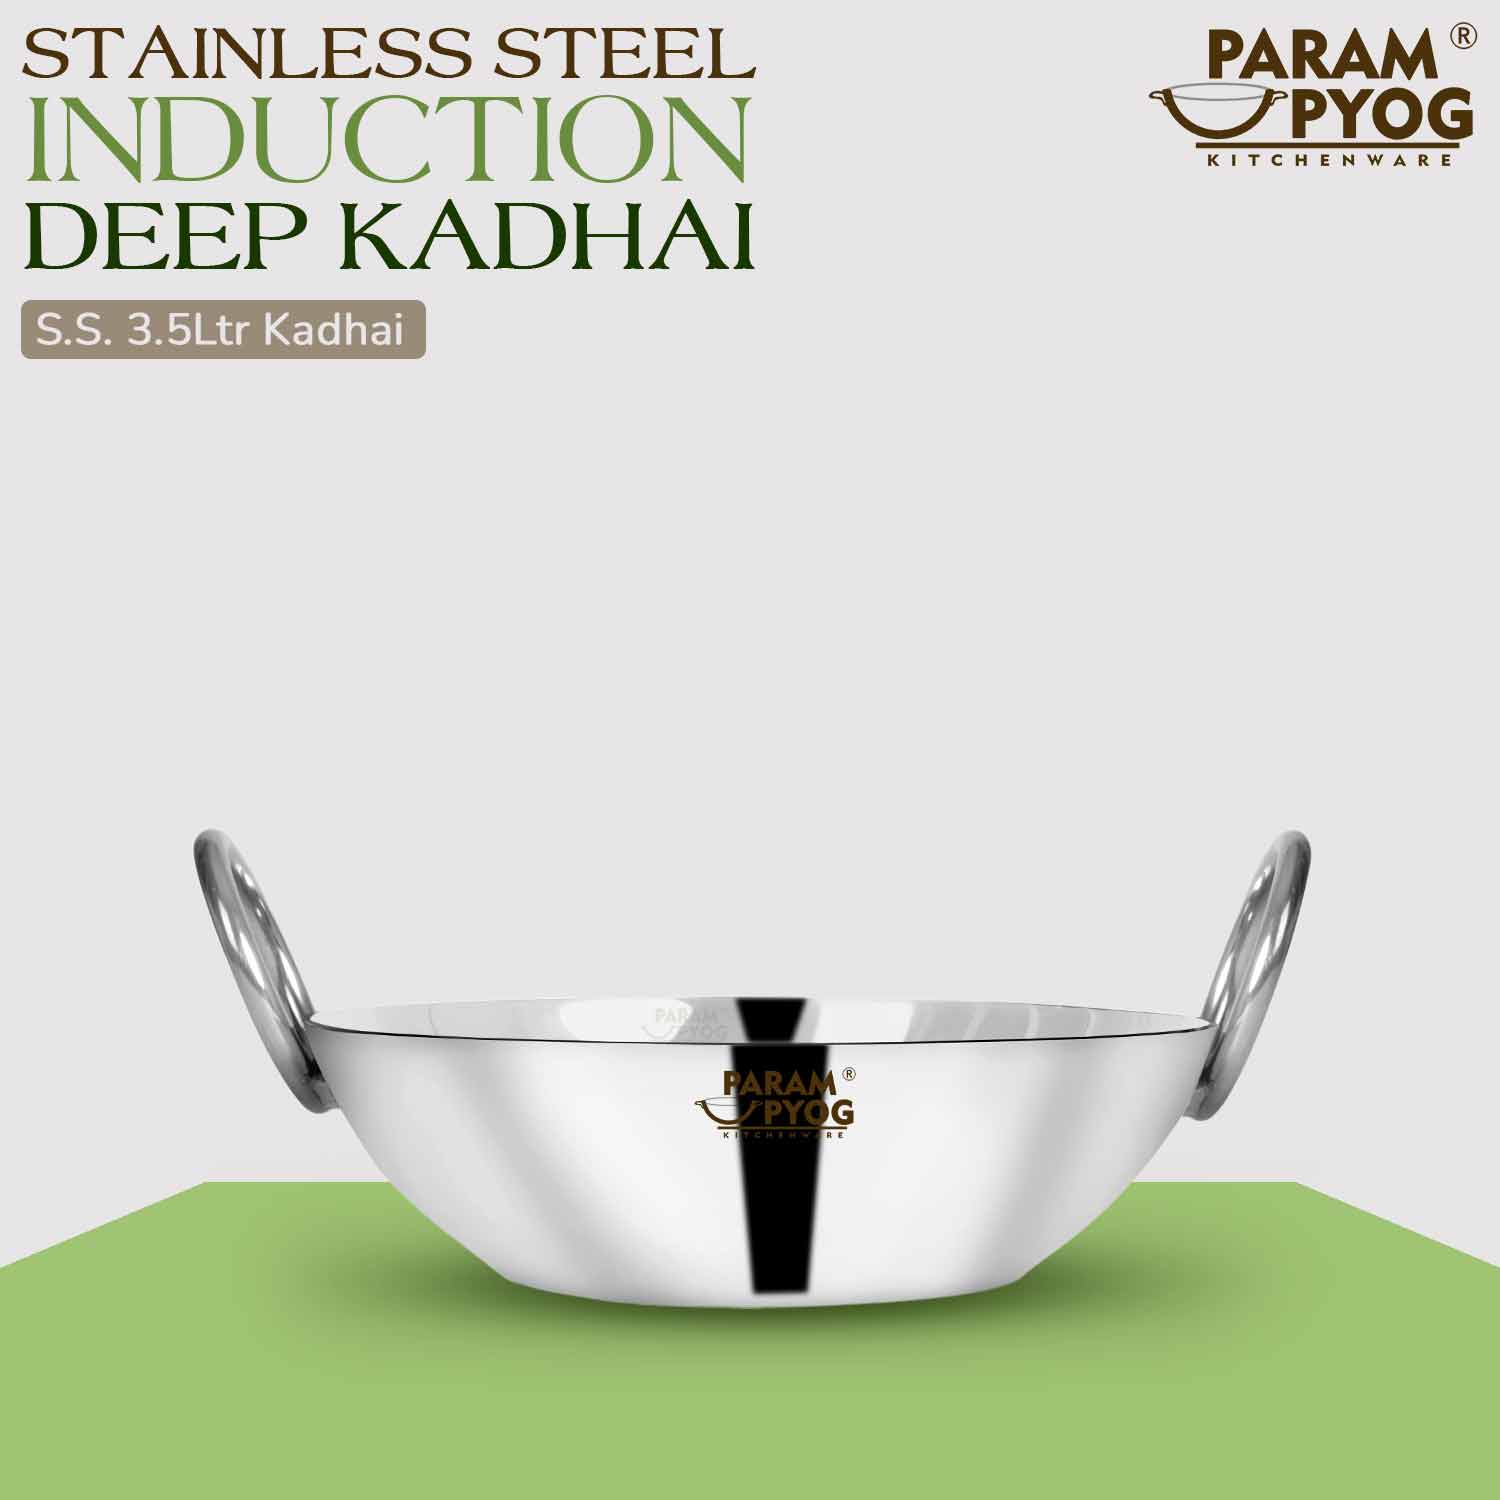 steel-induction-kadhai-param-upyog